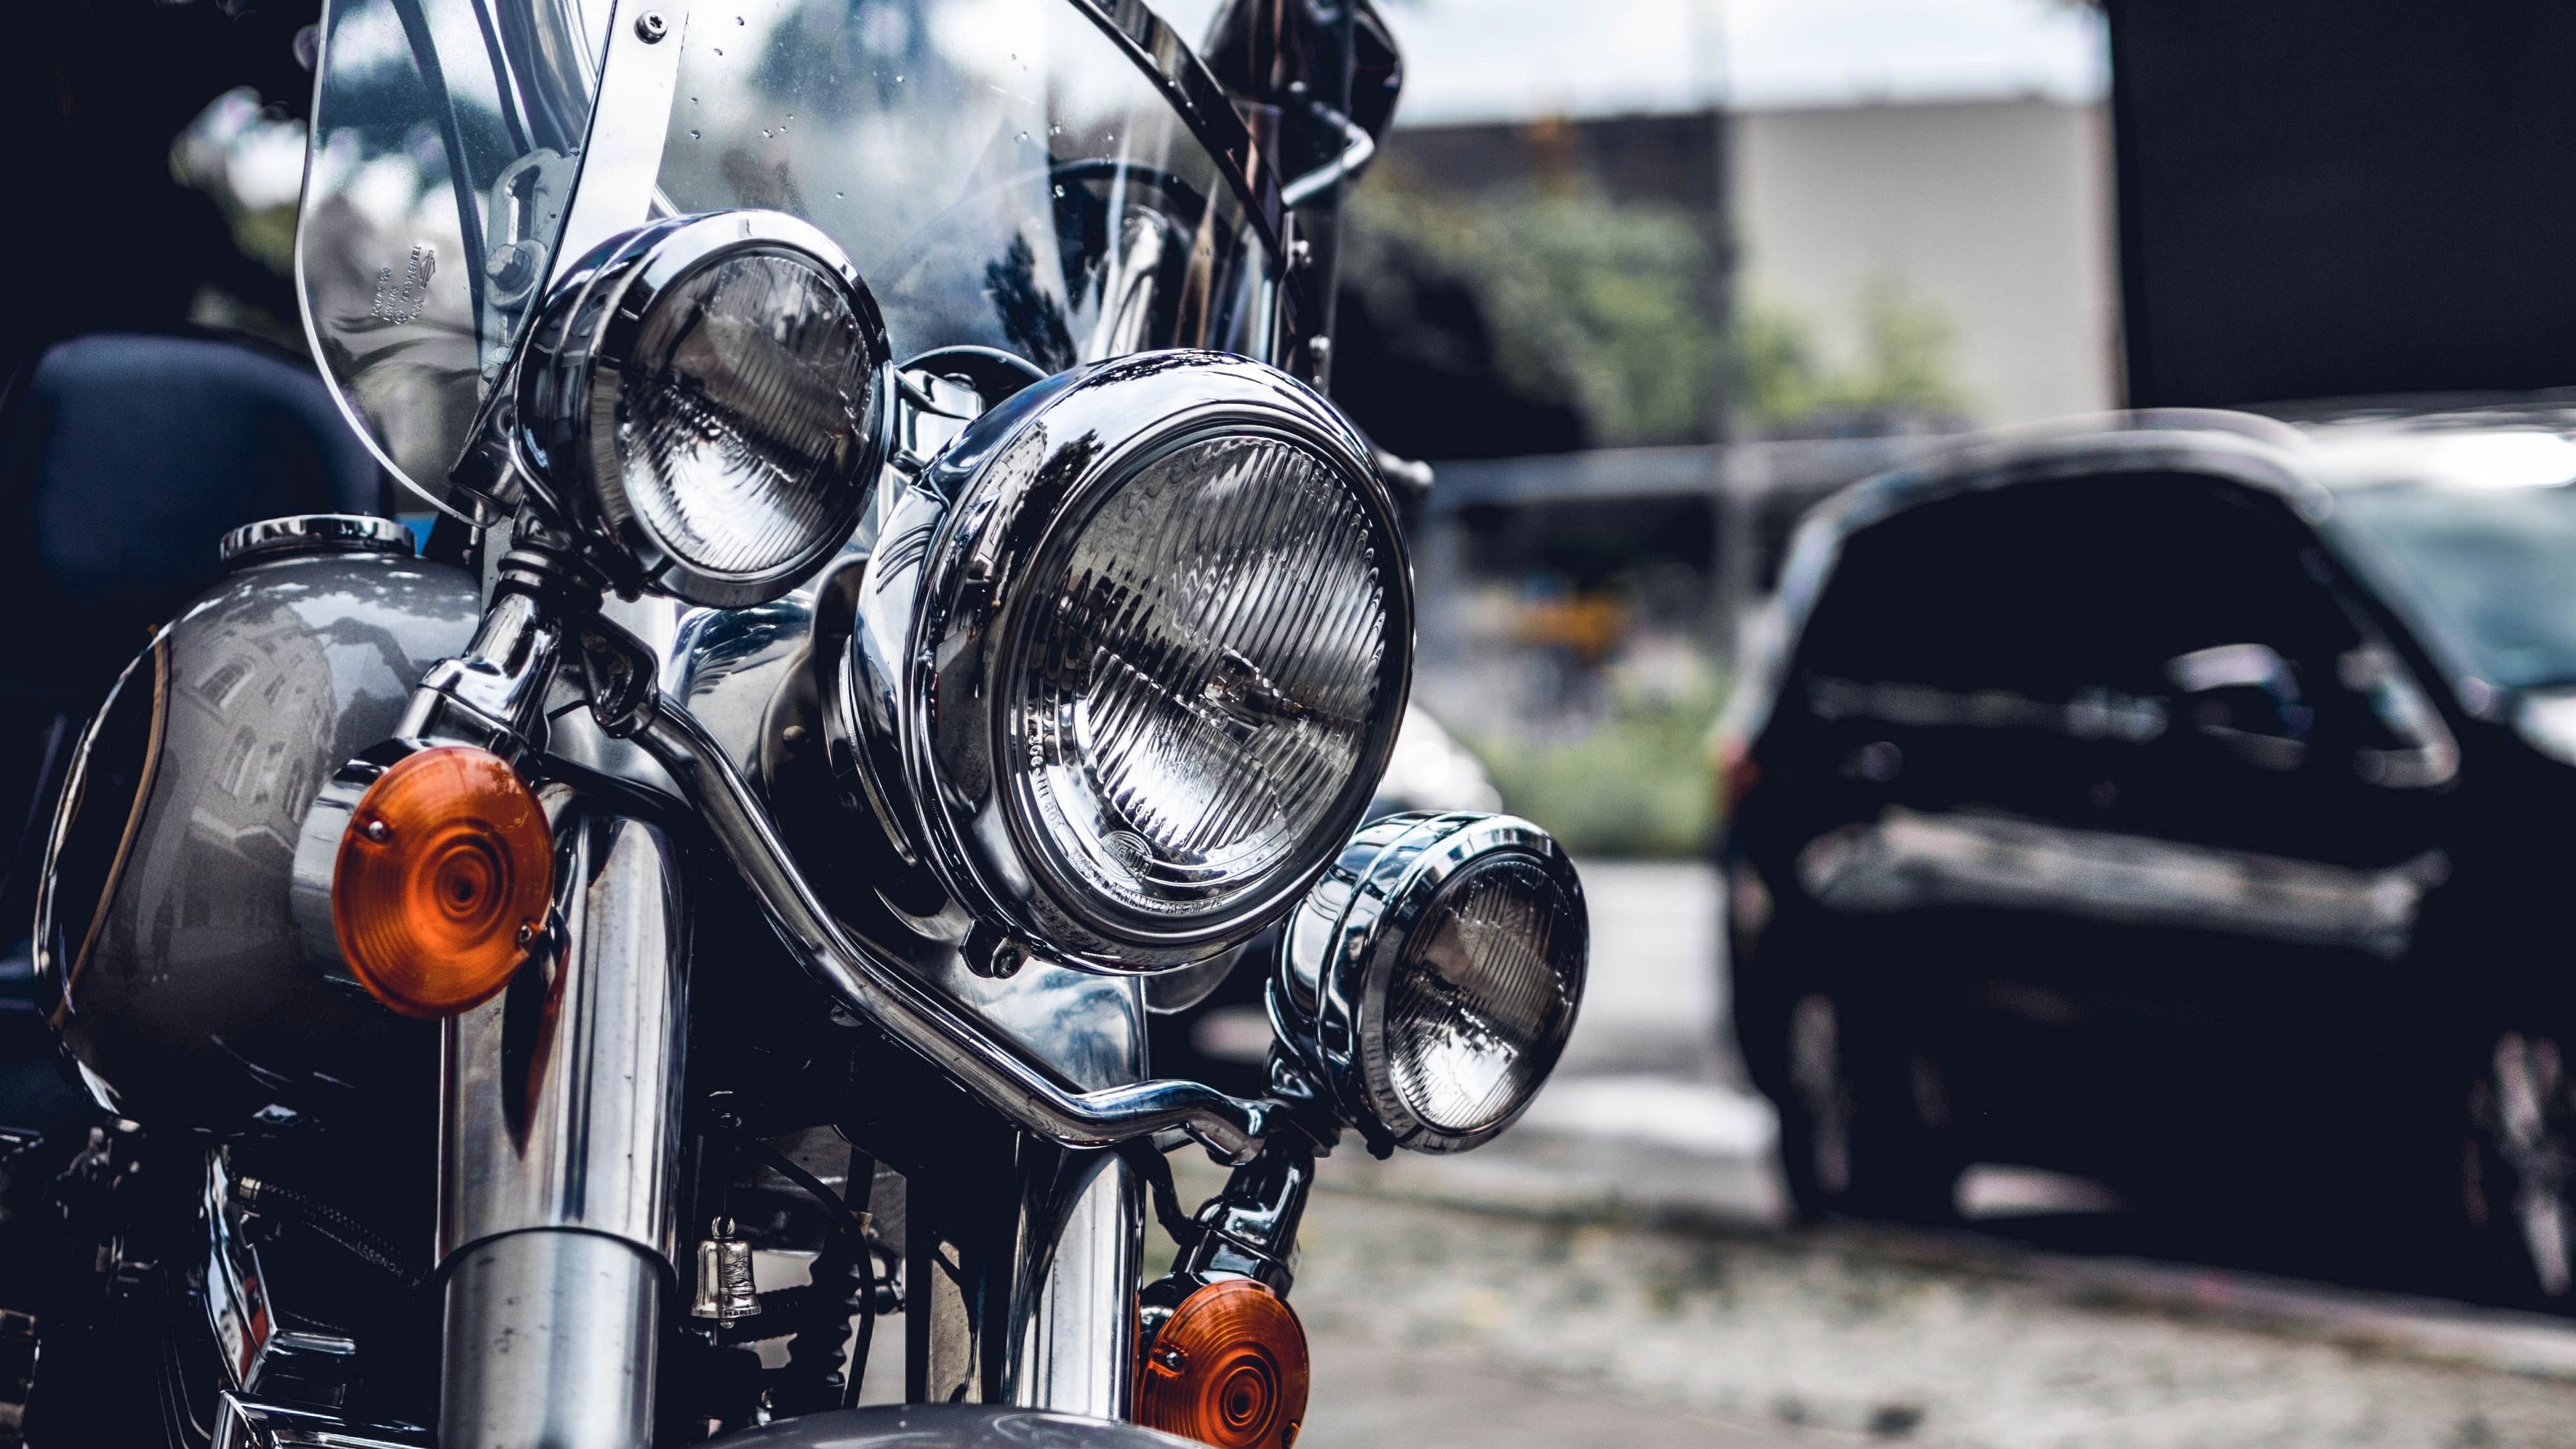 Indian Motorcycle, Headlight front view, Captivating details, 3840x2160 4K Desktop